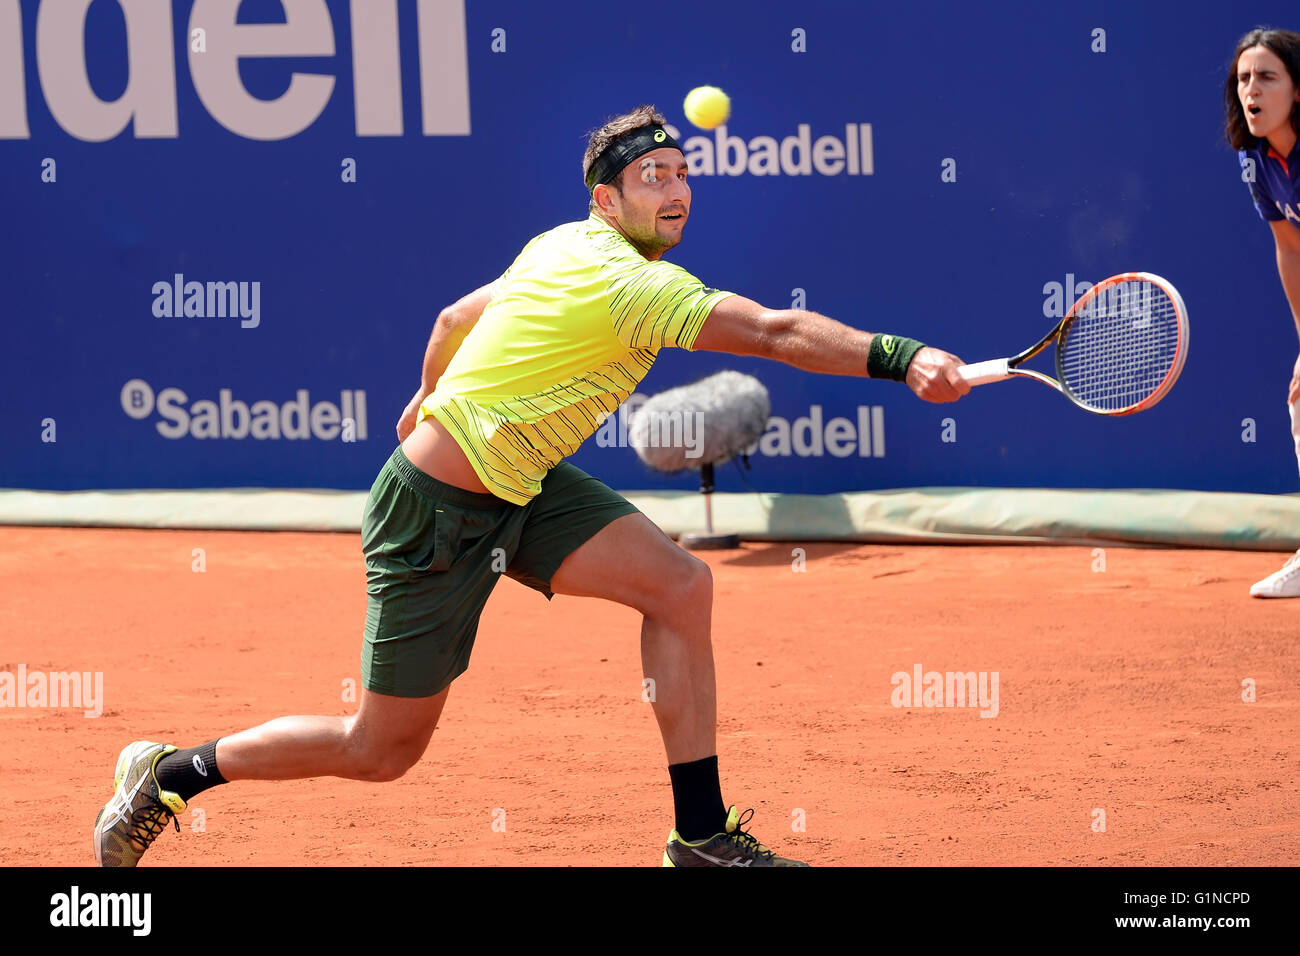 BARCELONA - Abr 20: Marinko Matosevic (Jugador de tenis de Australia) desempeña en la ATP Barcelona Open. Foto de stock